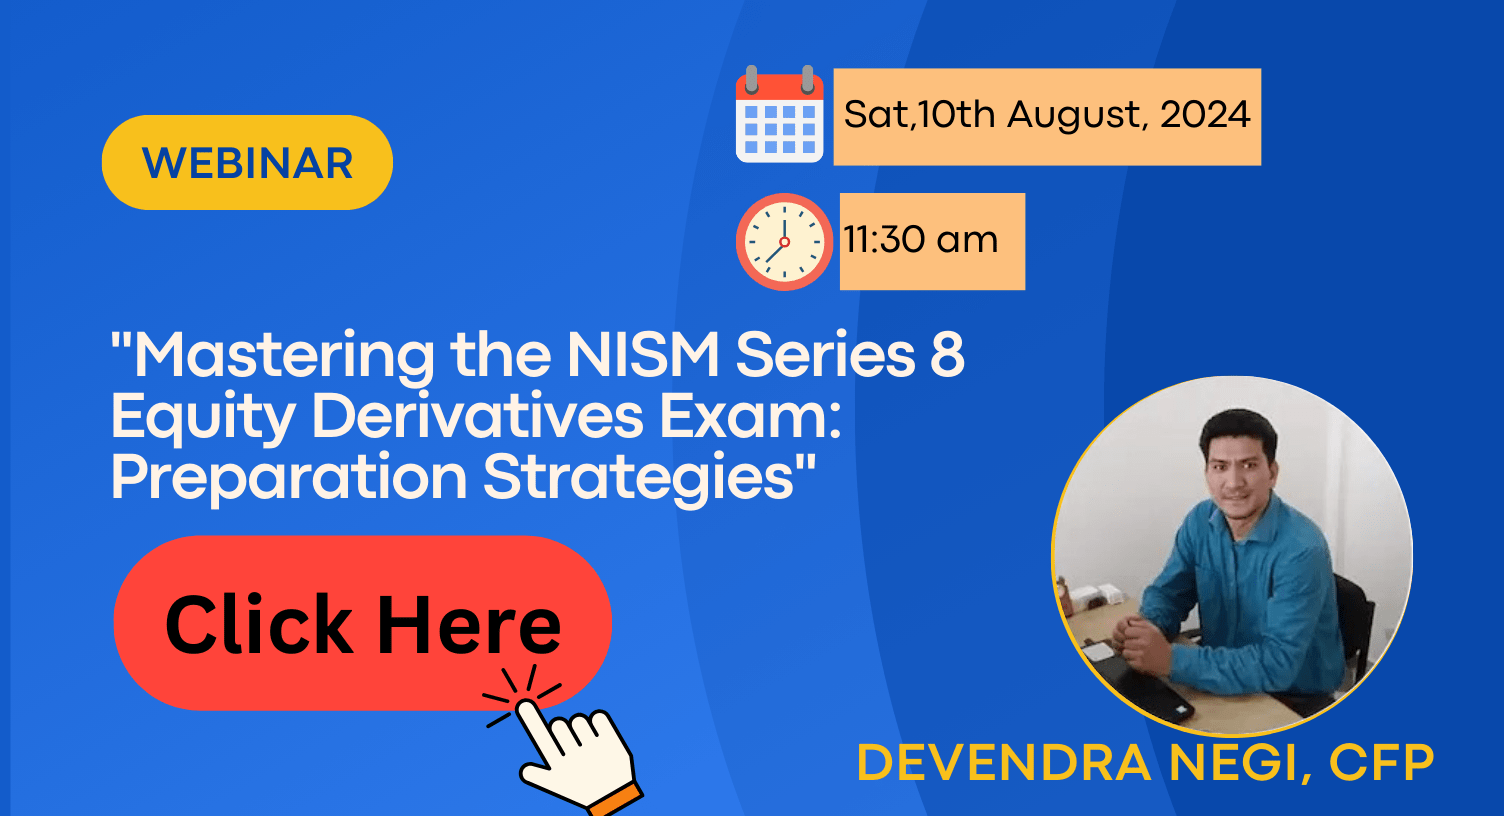 Webinar on Mastering the NISM Series 8 Equity Derivatives Exam Preparation Strategies